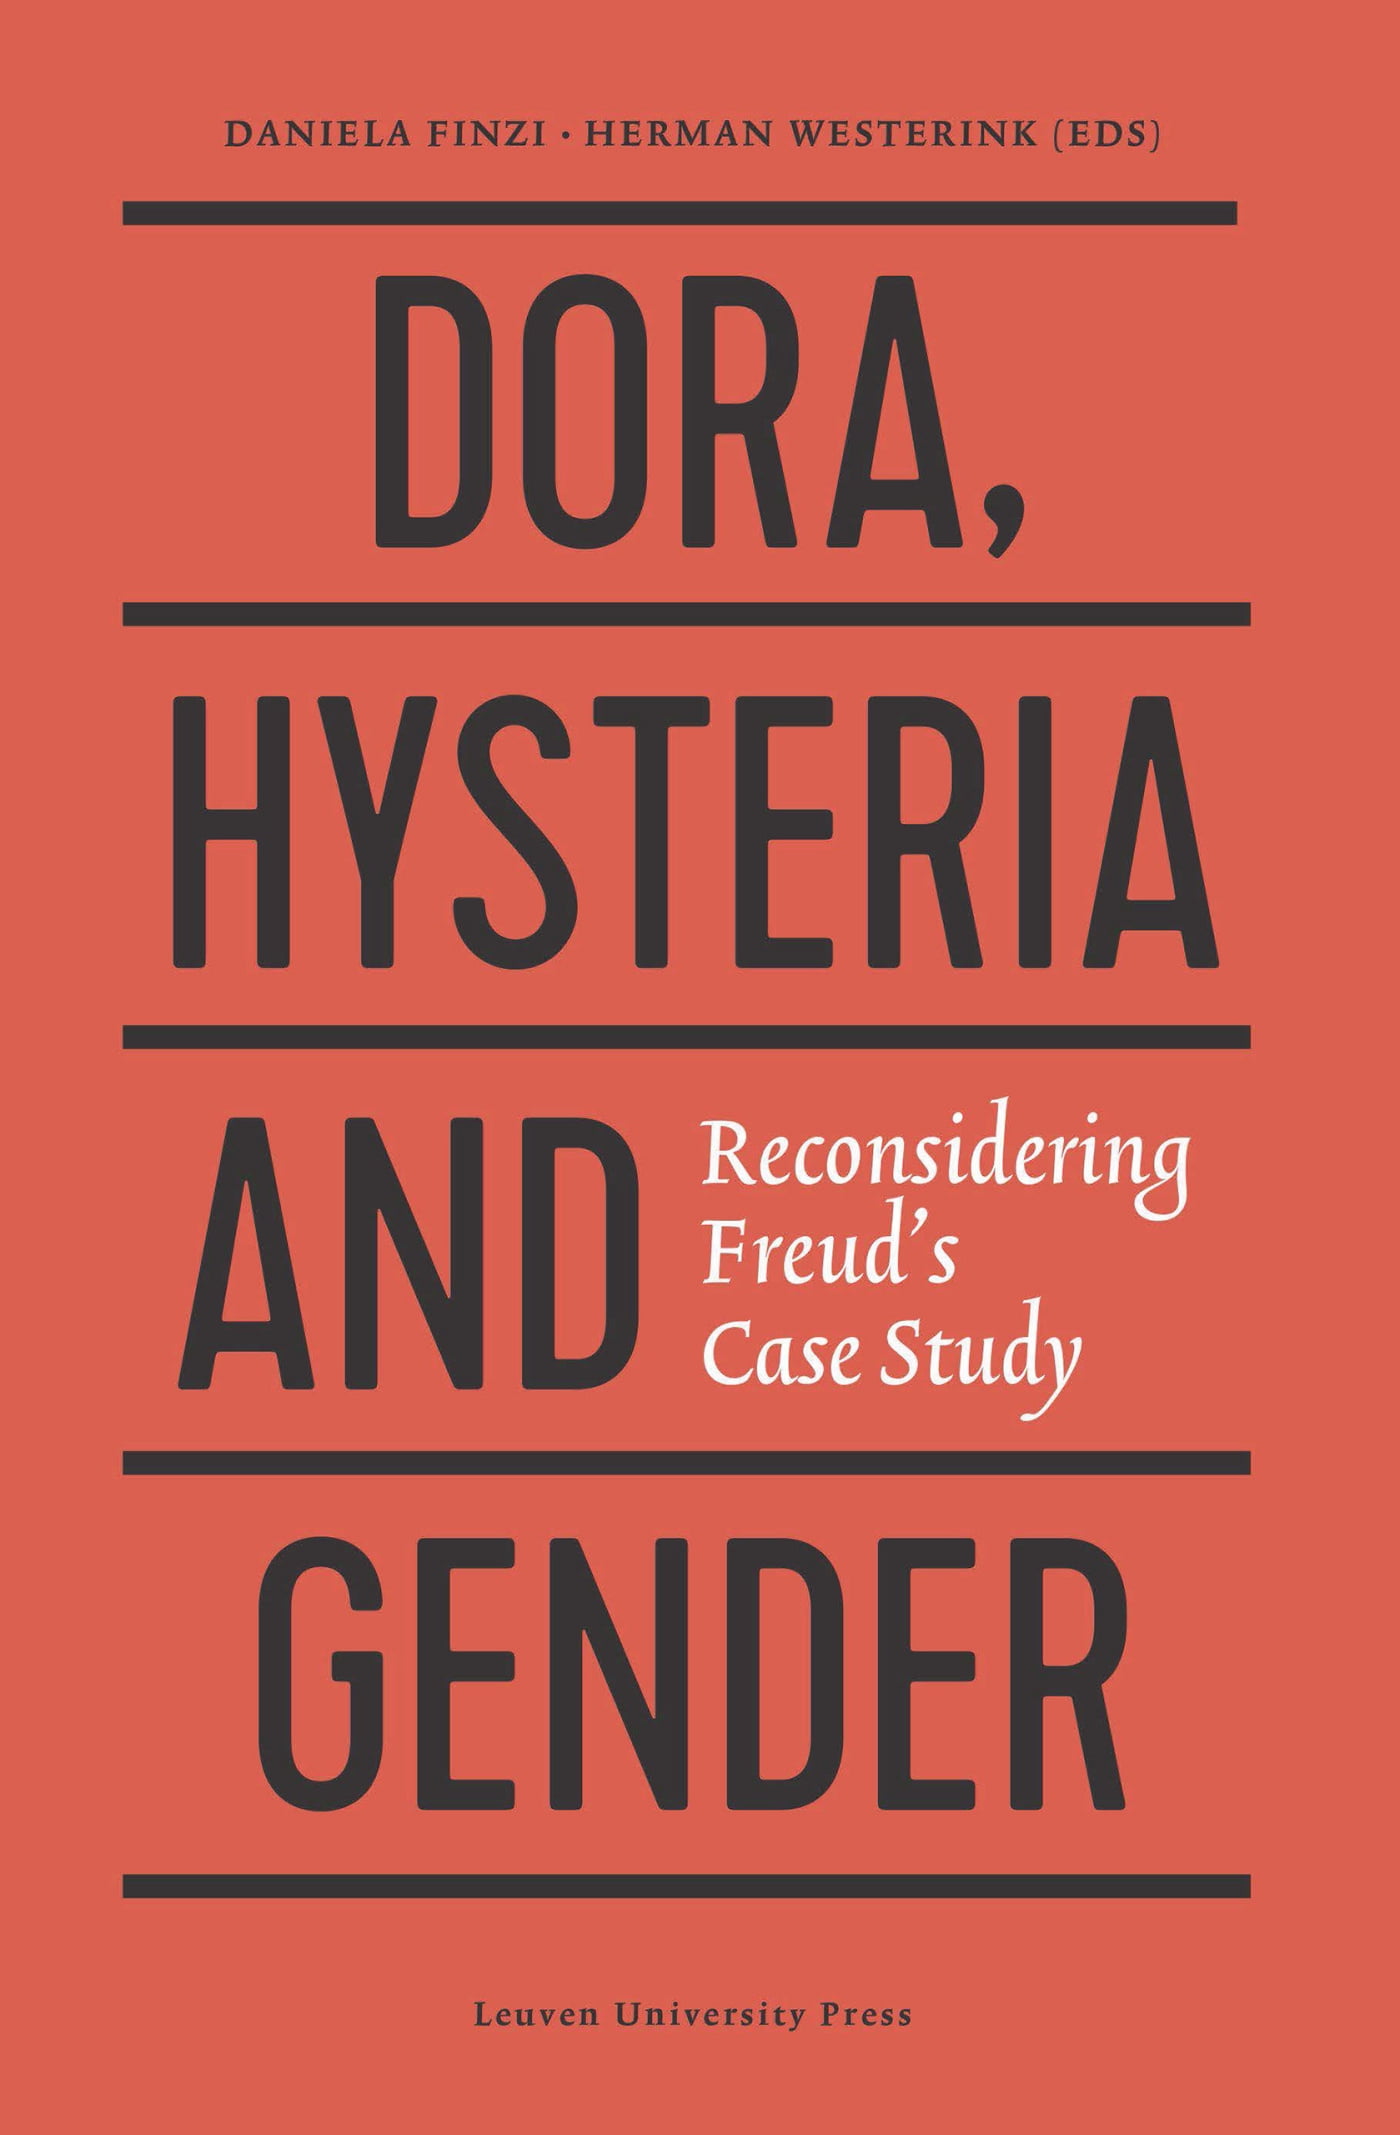 freud's case study of dora